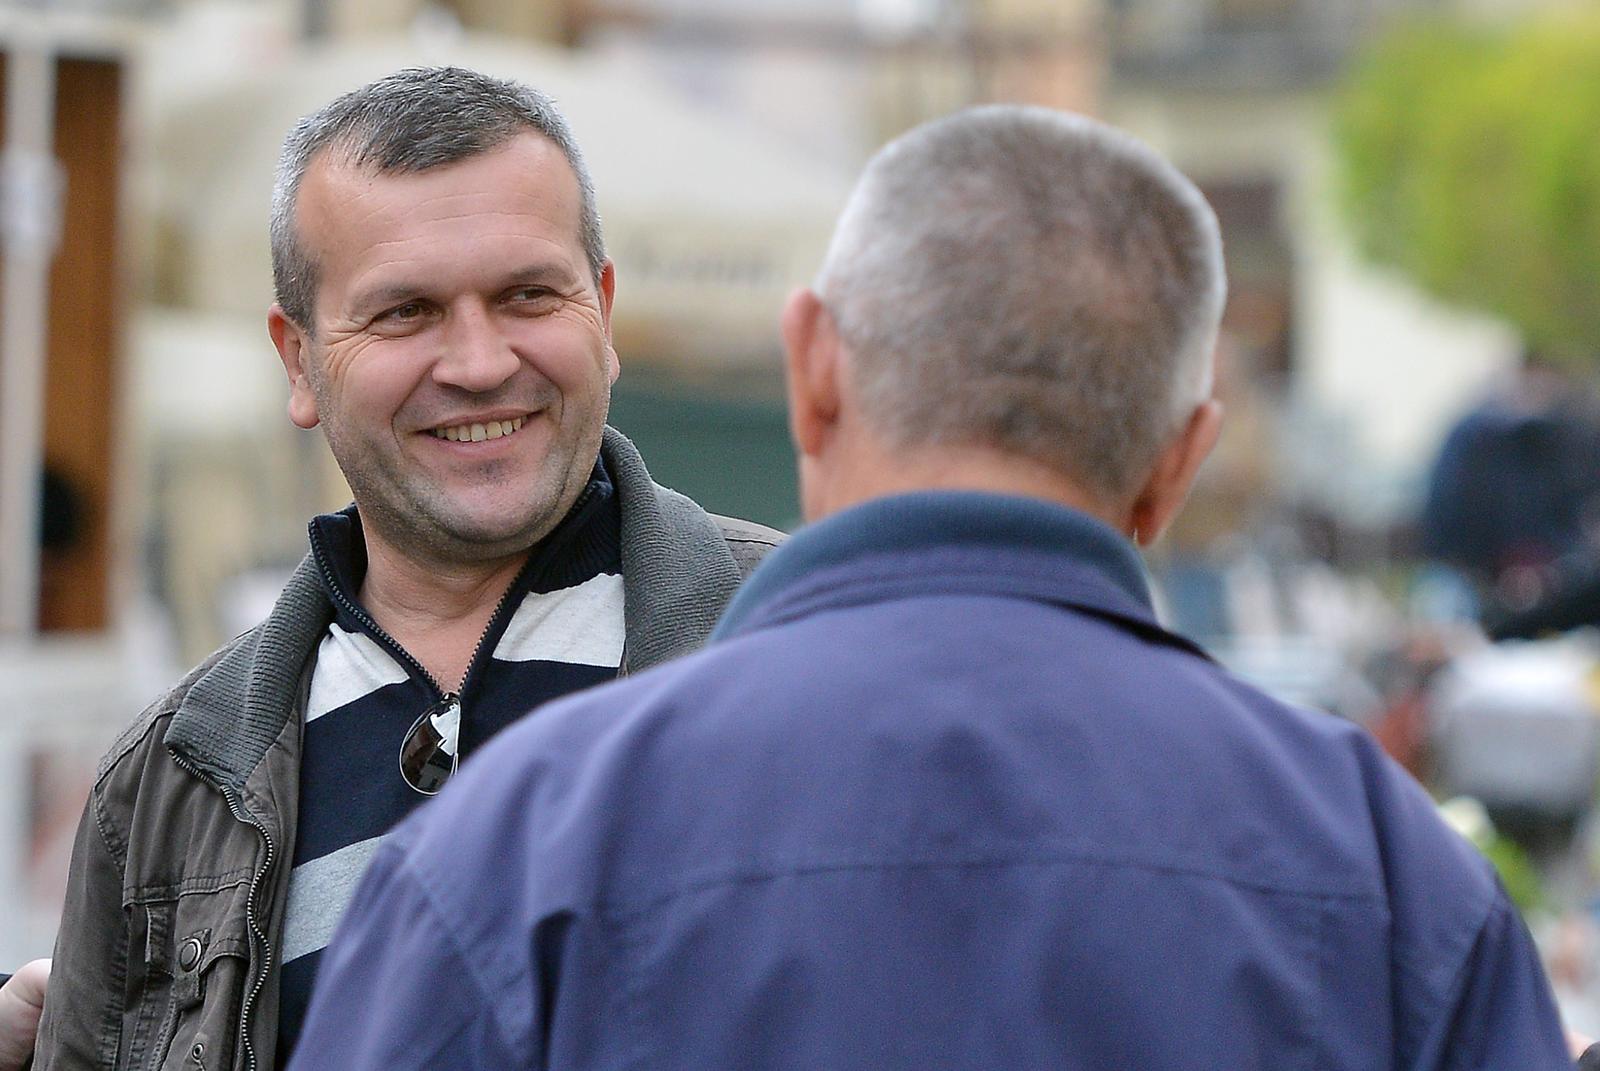 17.11.2015., Varazdin - Novoizabrani saborski zastupnik HDZ-a Andjelko Stricak porazgovao je na glavnom gradskom trgu s gradjanima.rPhoto: Marko Jurinec/PIXSELL